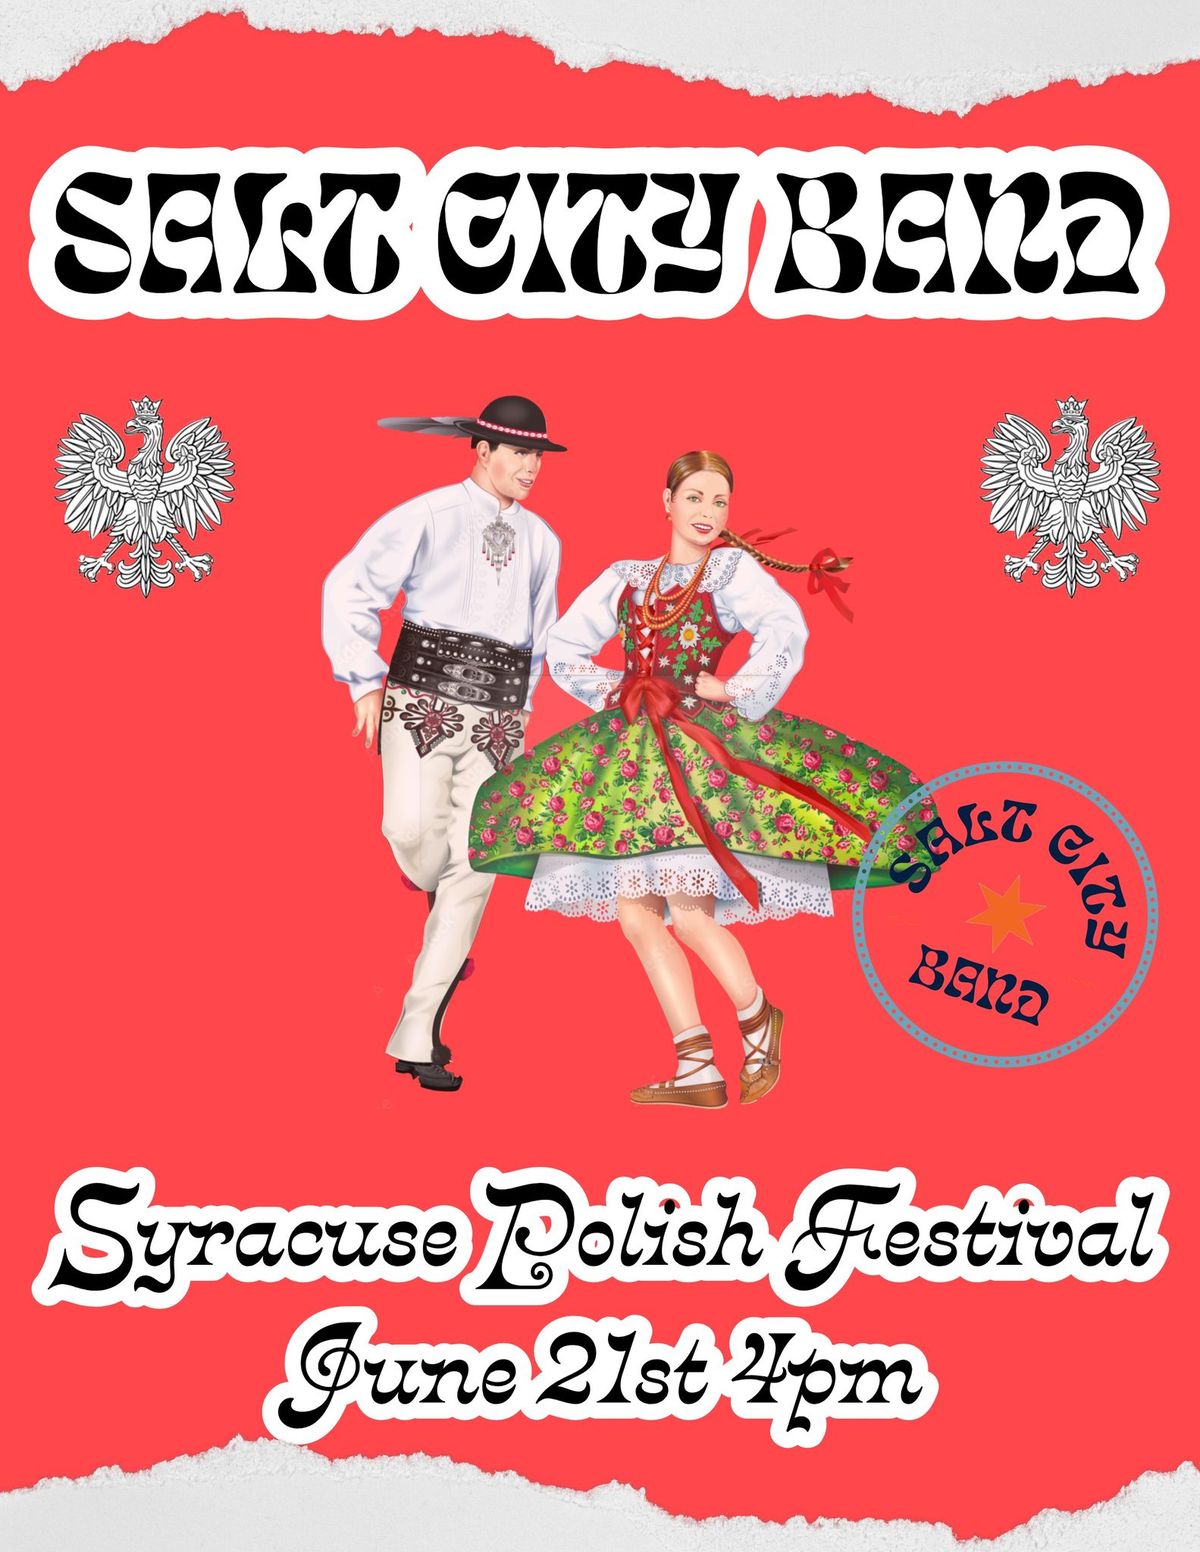 Live at the Syracuse Polish Festival